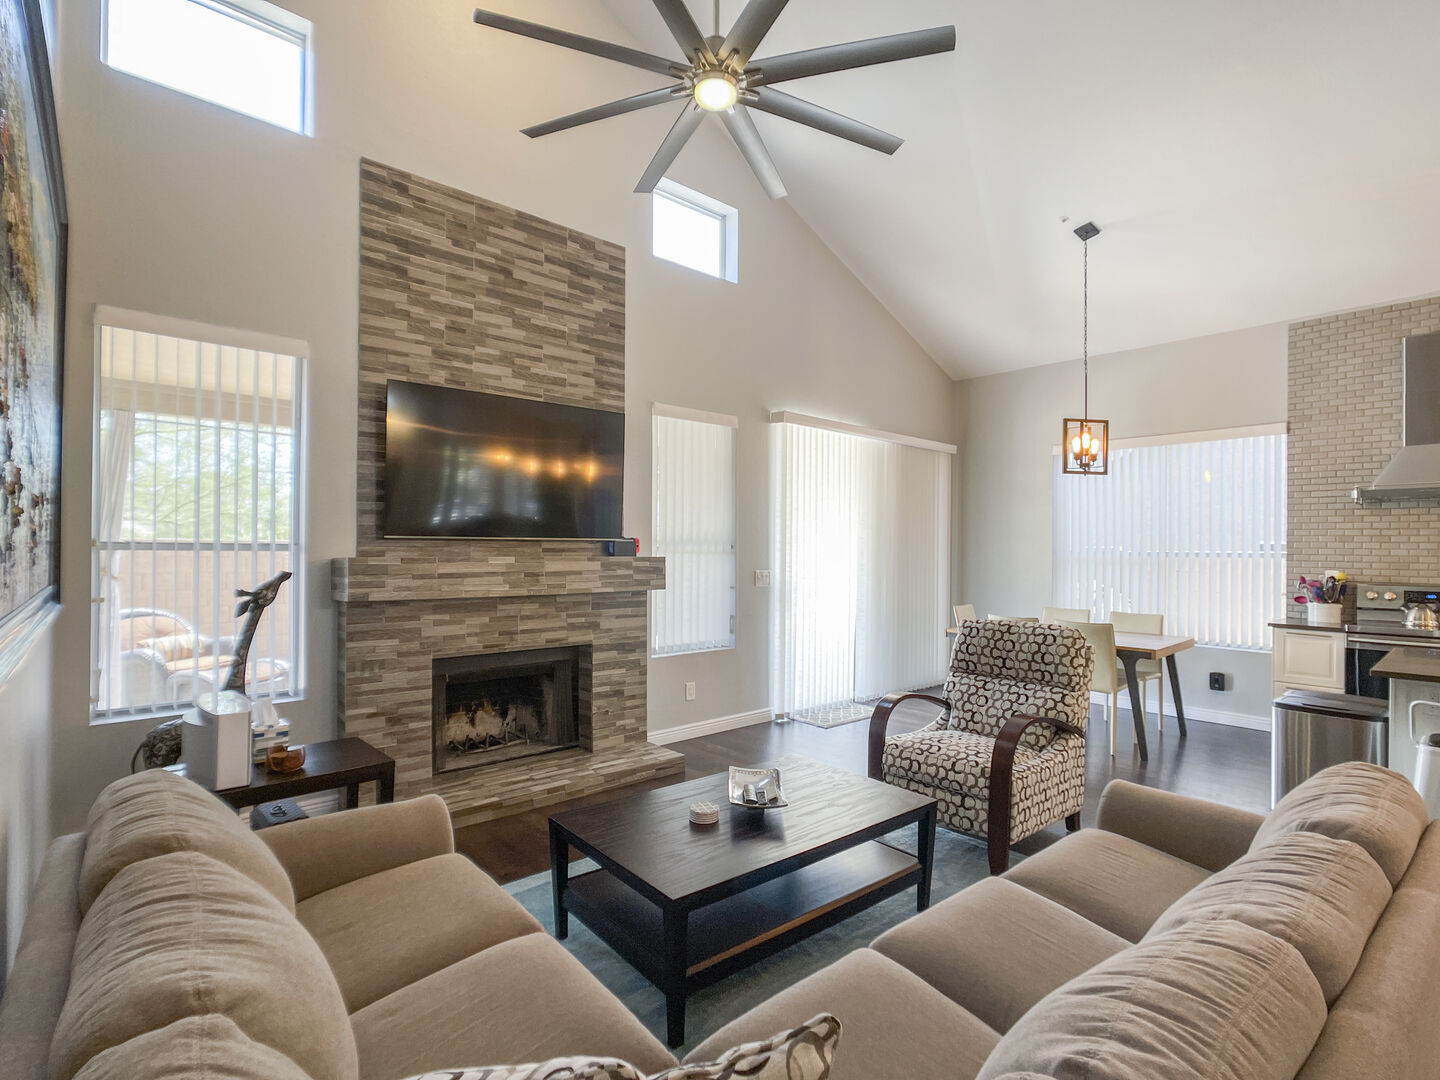 Calming fireplace enhances open concept living space.